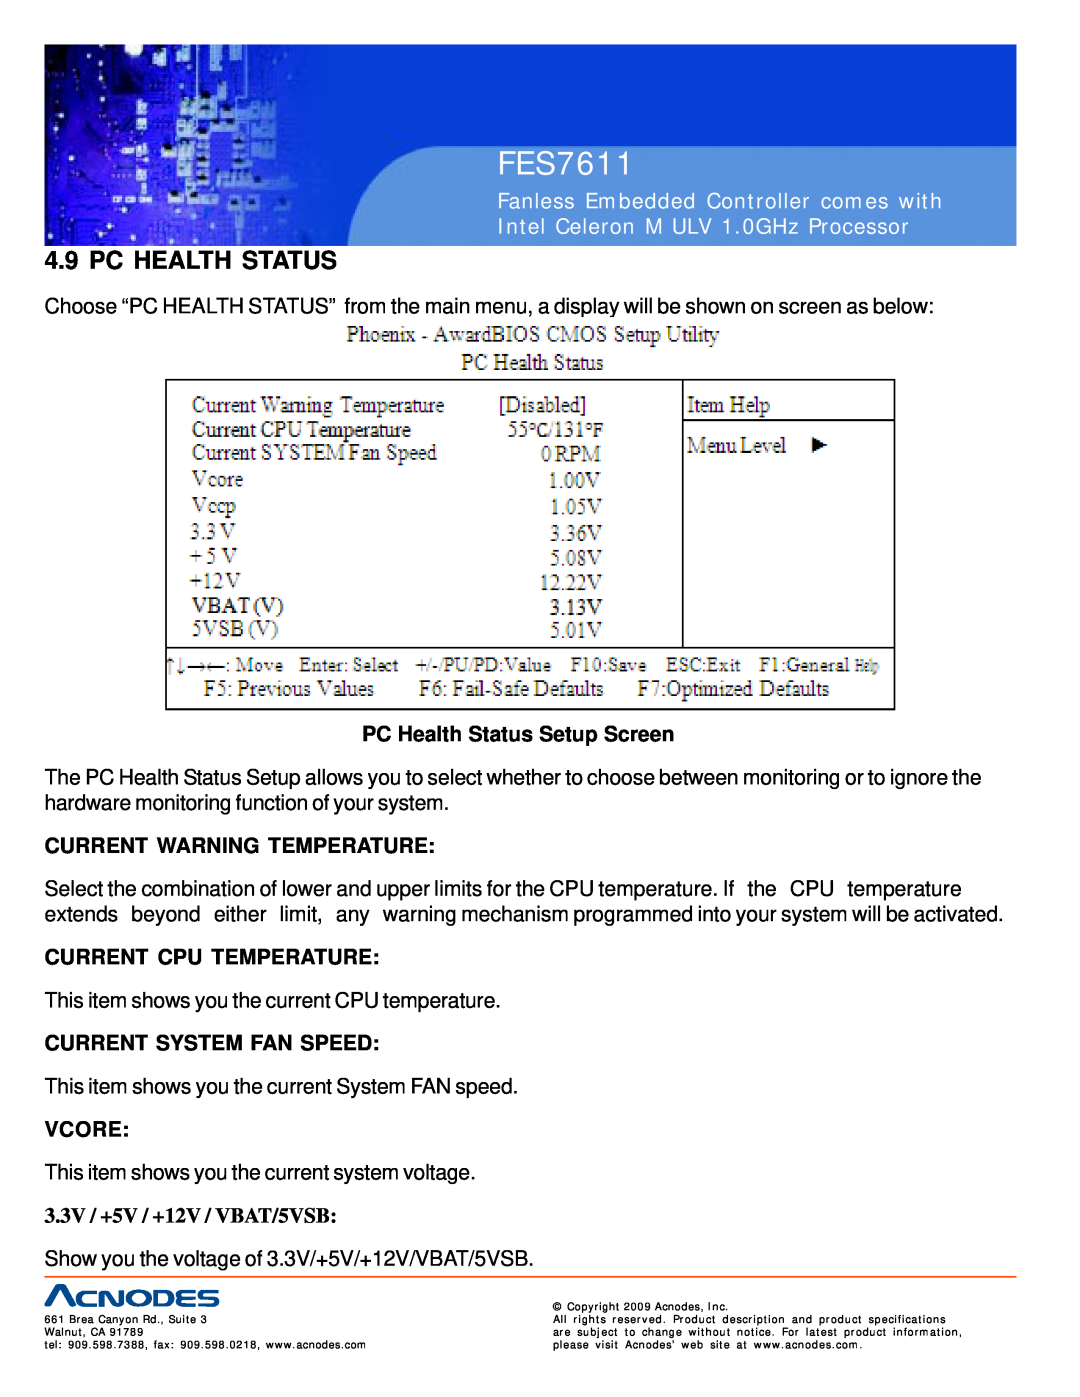 Acnodes FES7611 Pc Health Status, PC Health Status Setup Screen, Current Warning Temperature, Current Cpu Temperature 